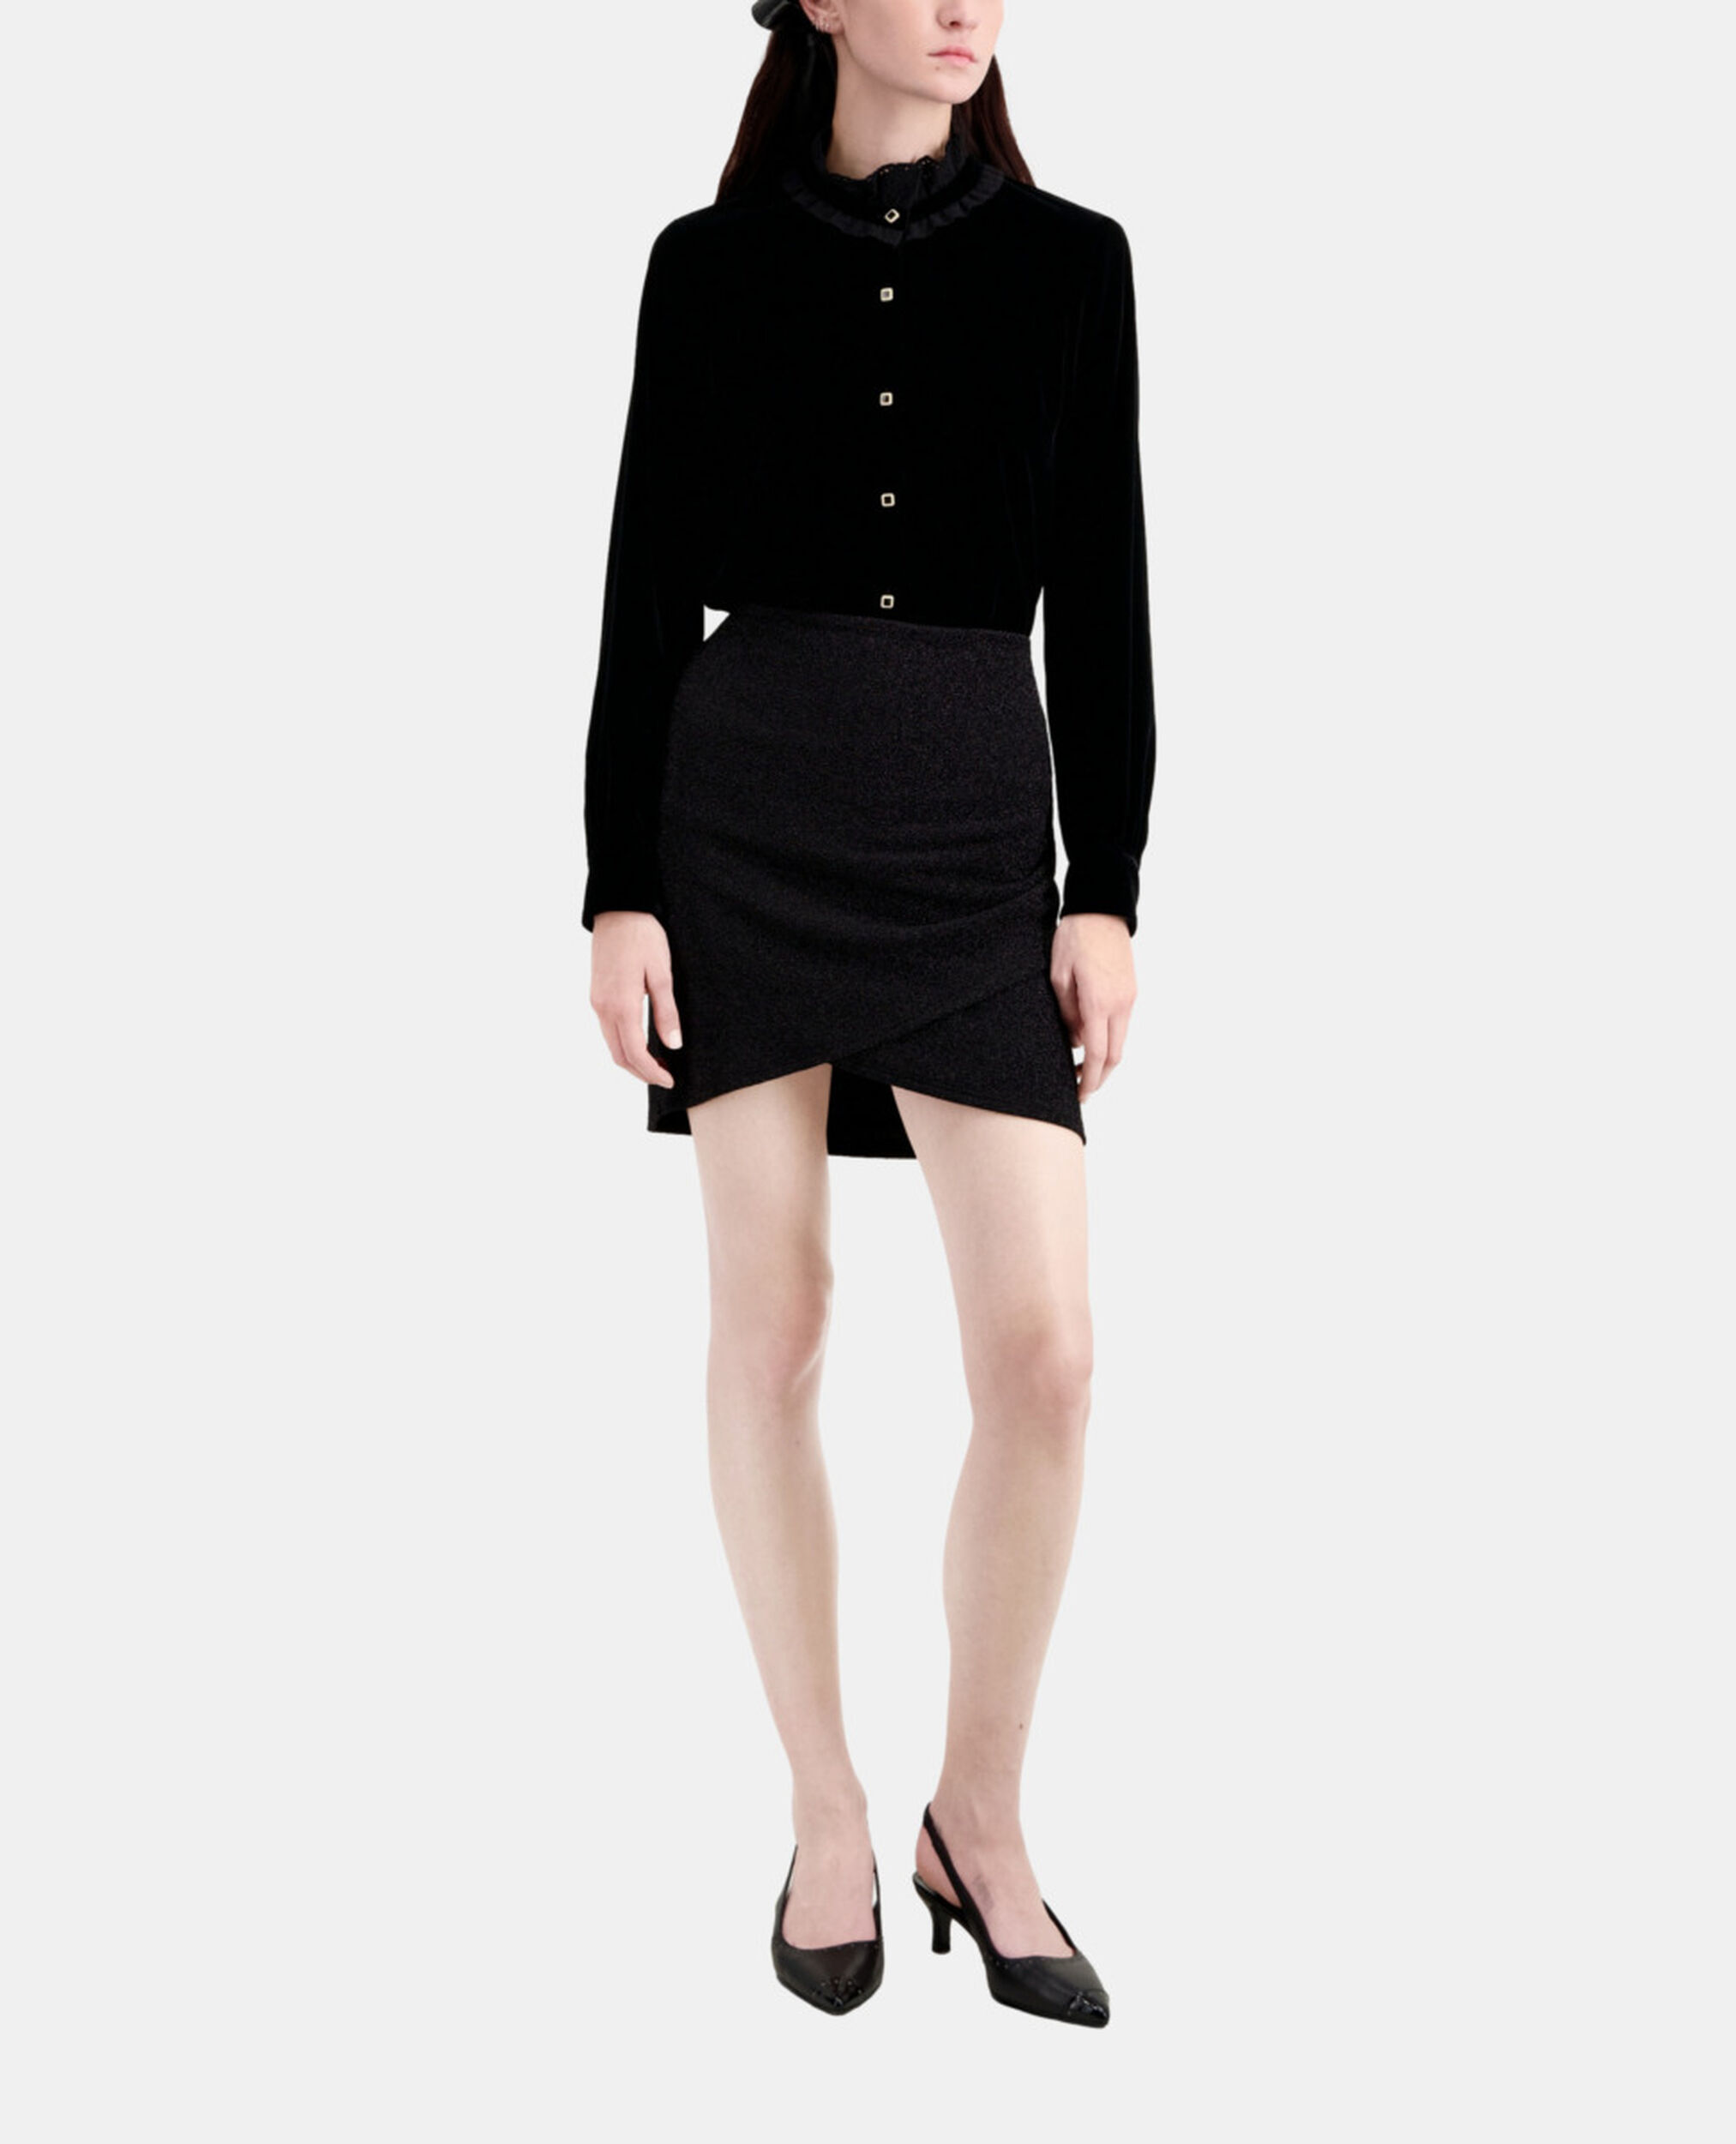 Short black glitter effect skirt, BLACK, hi-res image number null